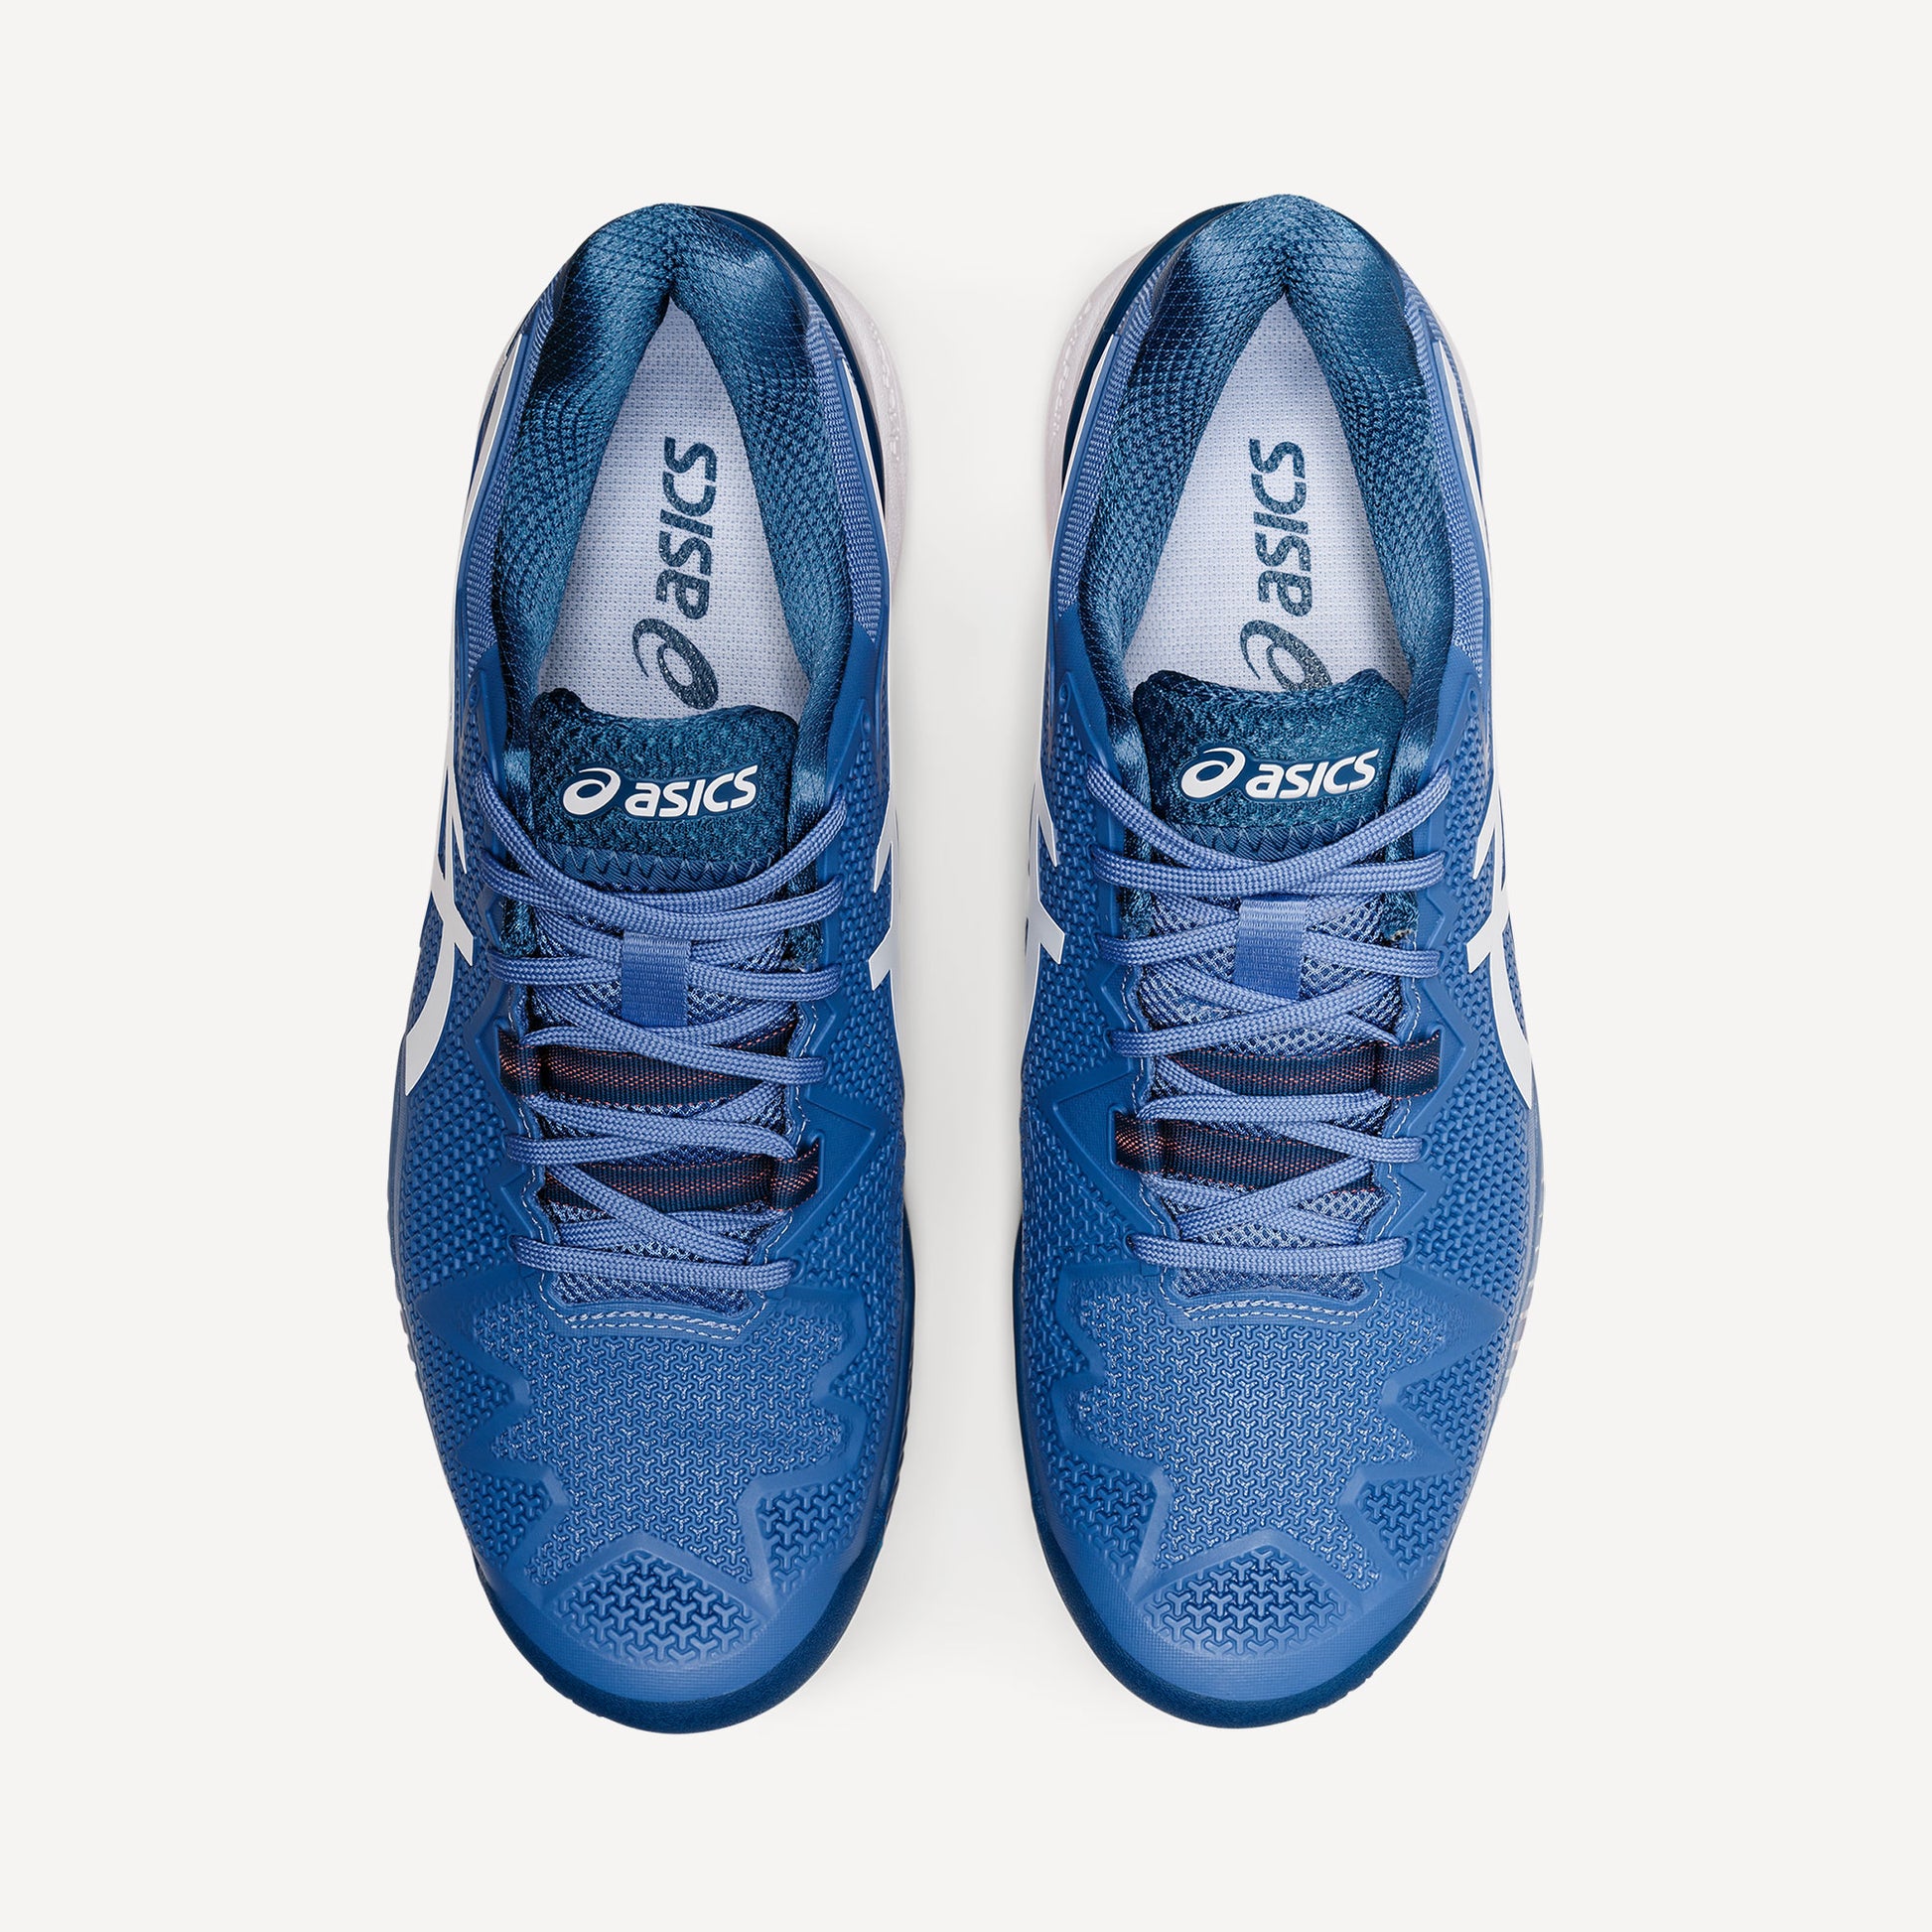 ASICS Gel-Resolution 8 Men's Clay Court Tennis Shoes Blue (7)